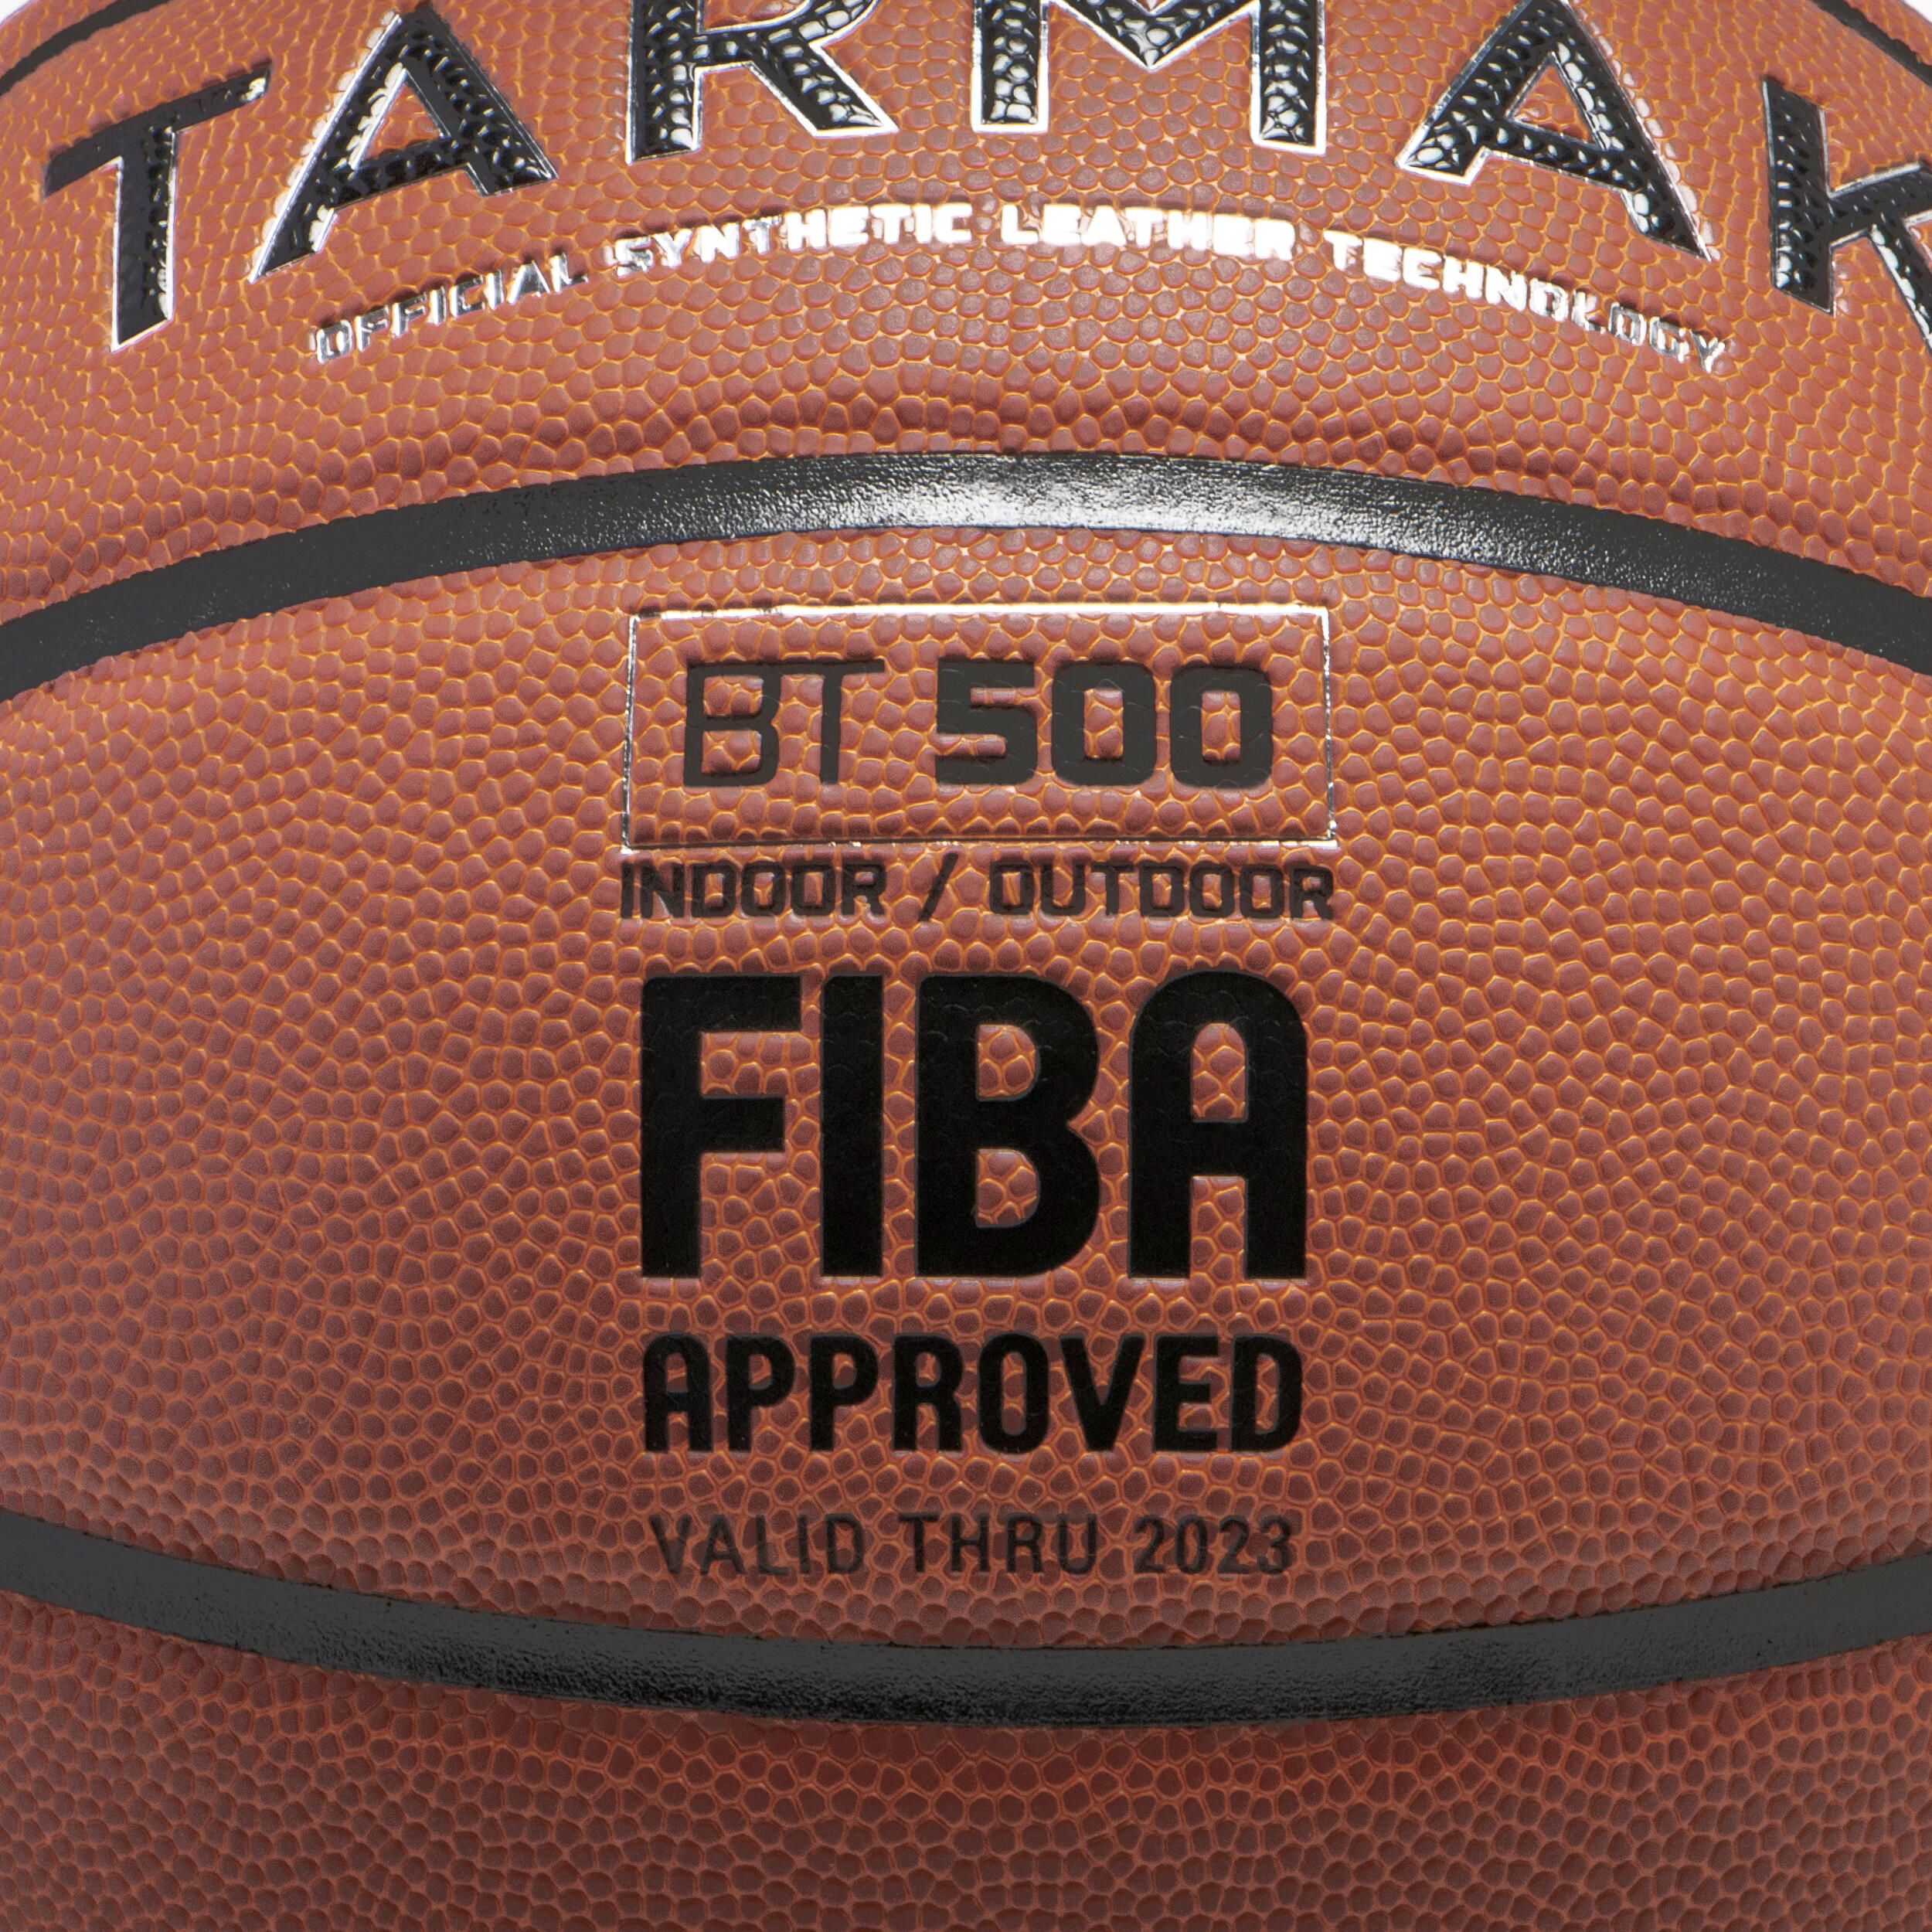 Size 6 FIBA Basketball BT500 Touch - Orange 4/5